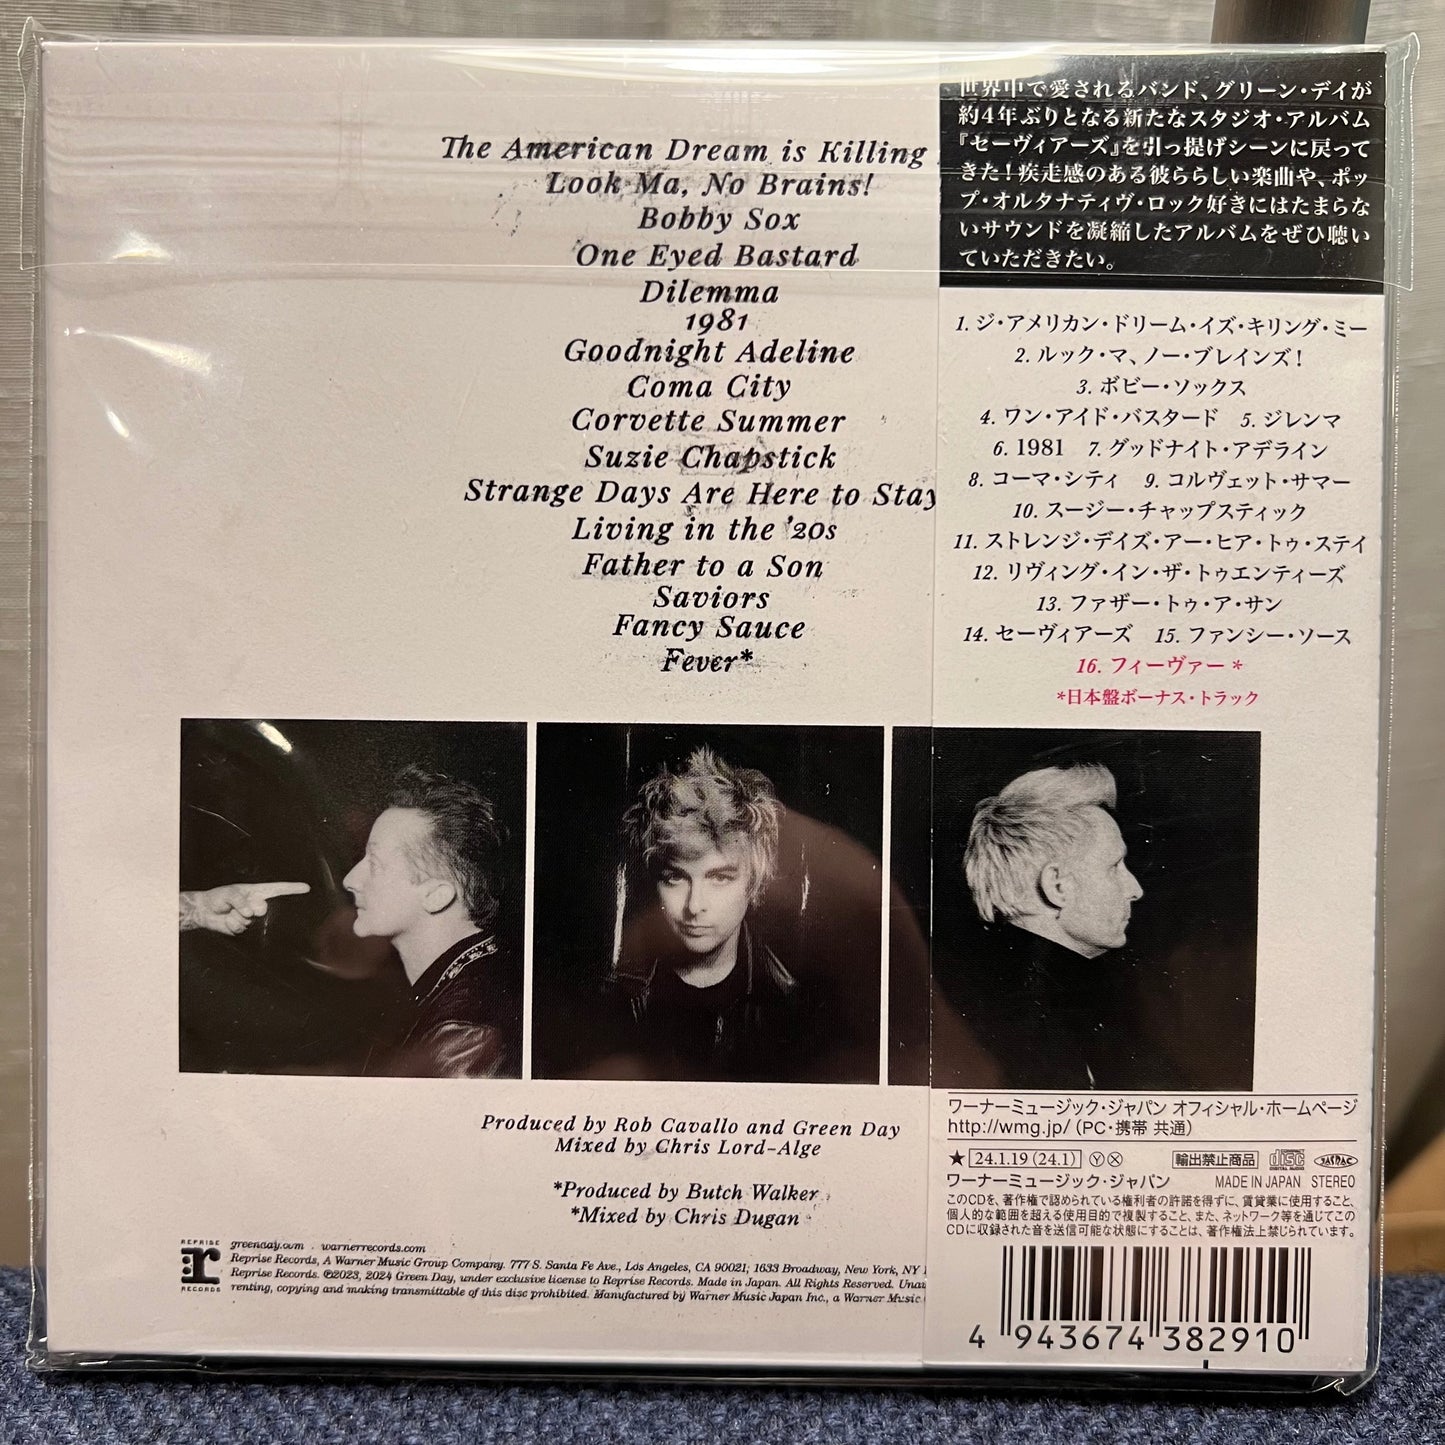 Green Day "Saviors" CD (Japanese Edition w/ Bonus Track)